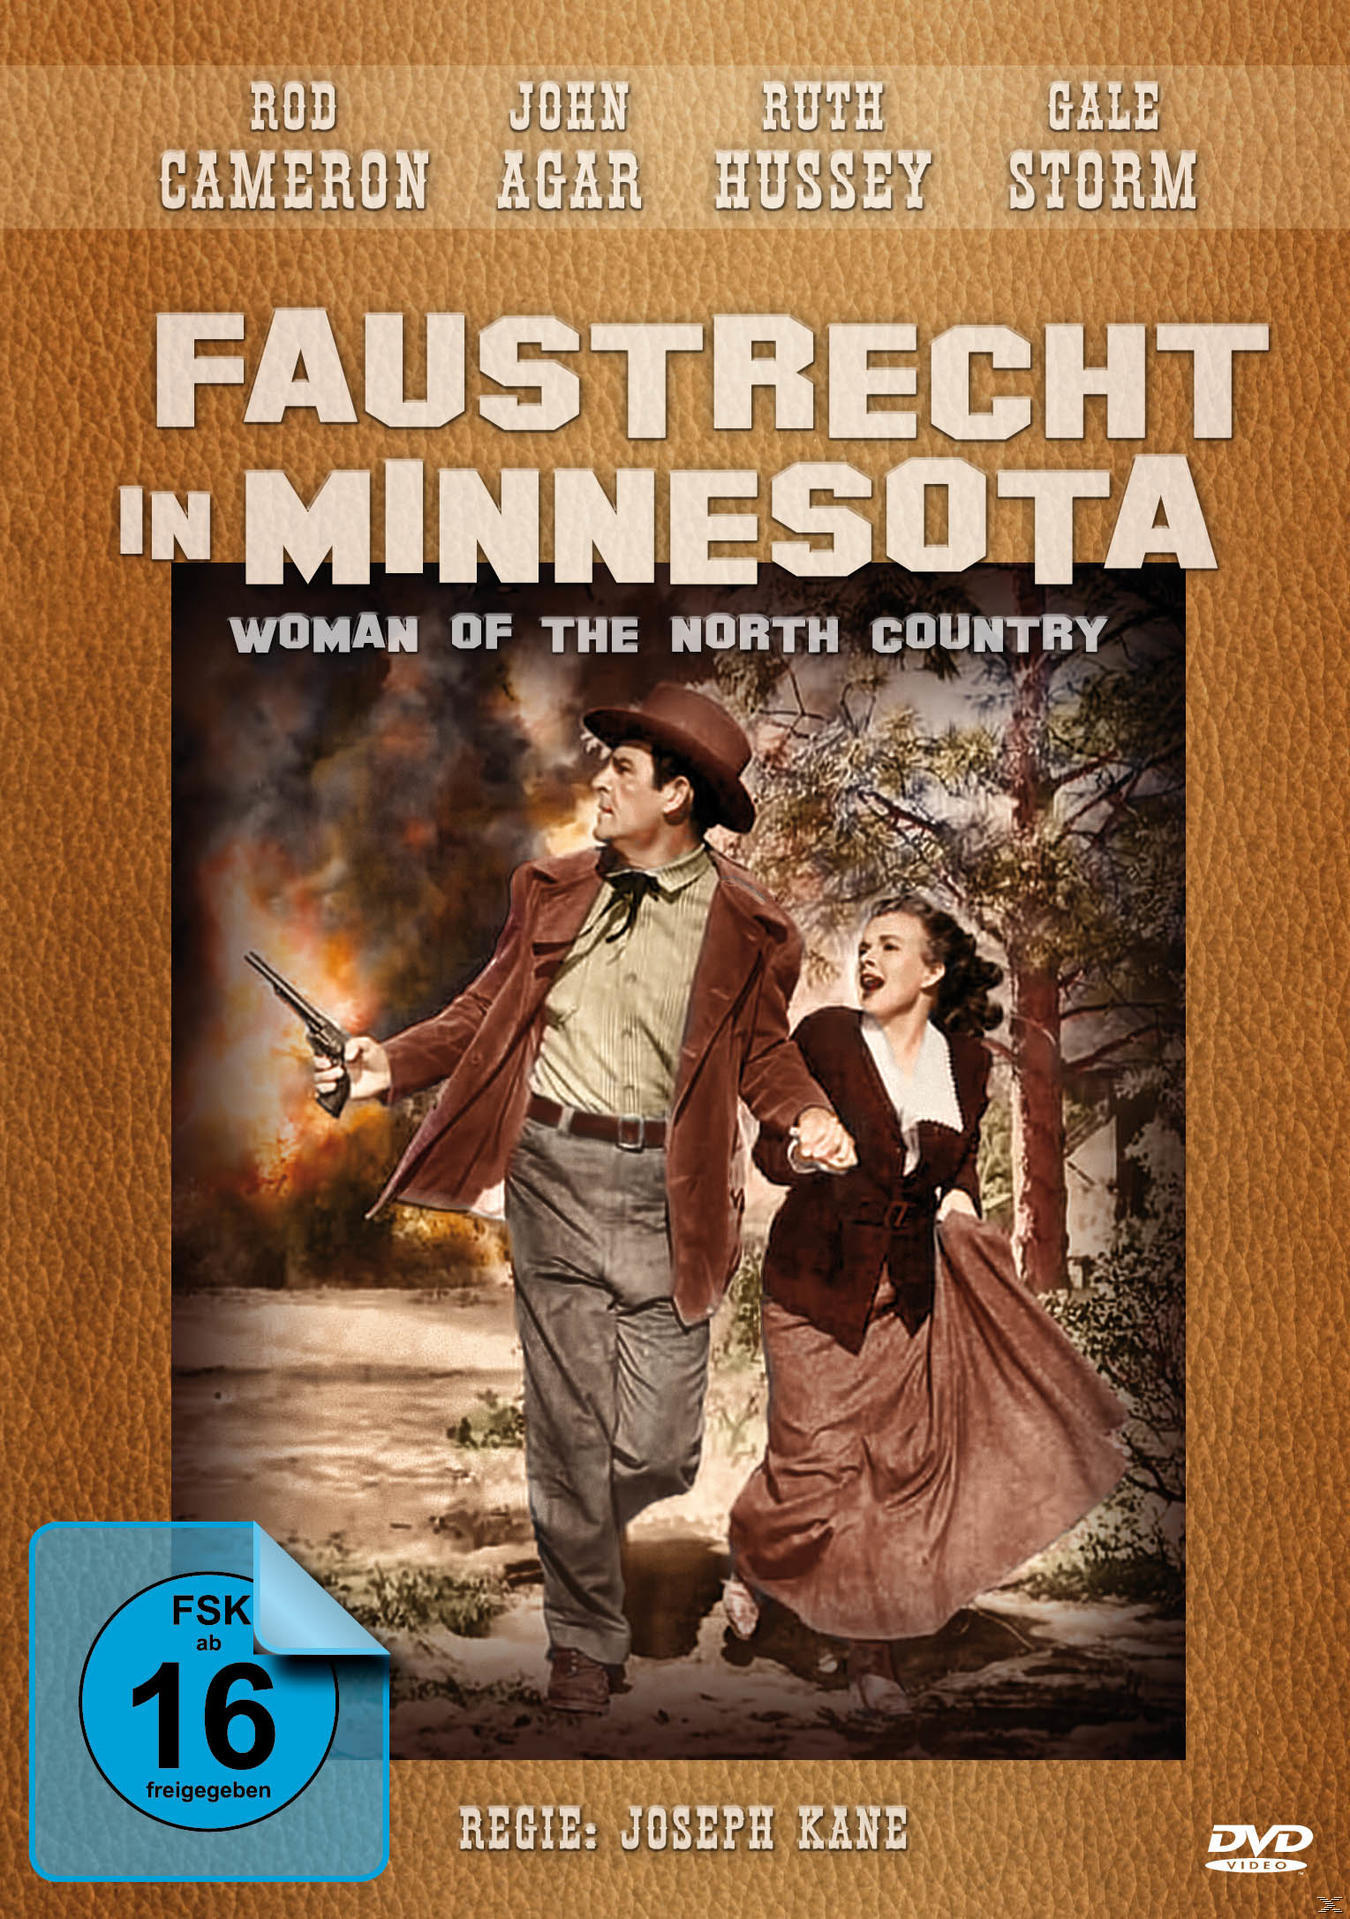 Minnesota DVD in Faustrecht